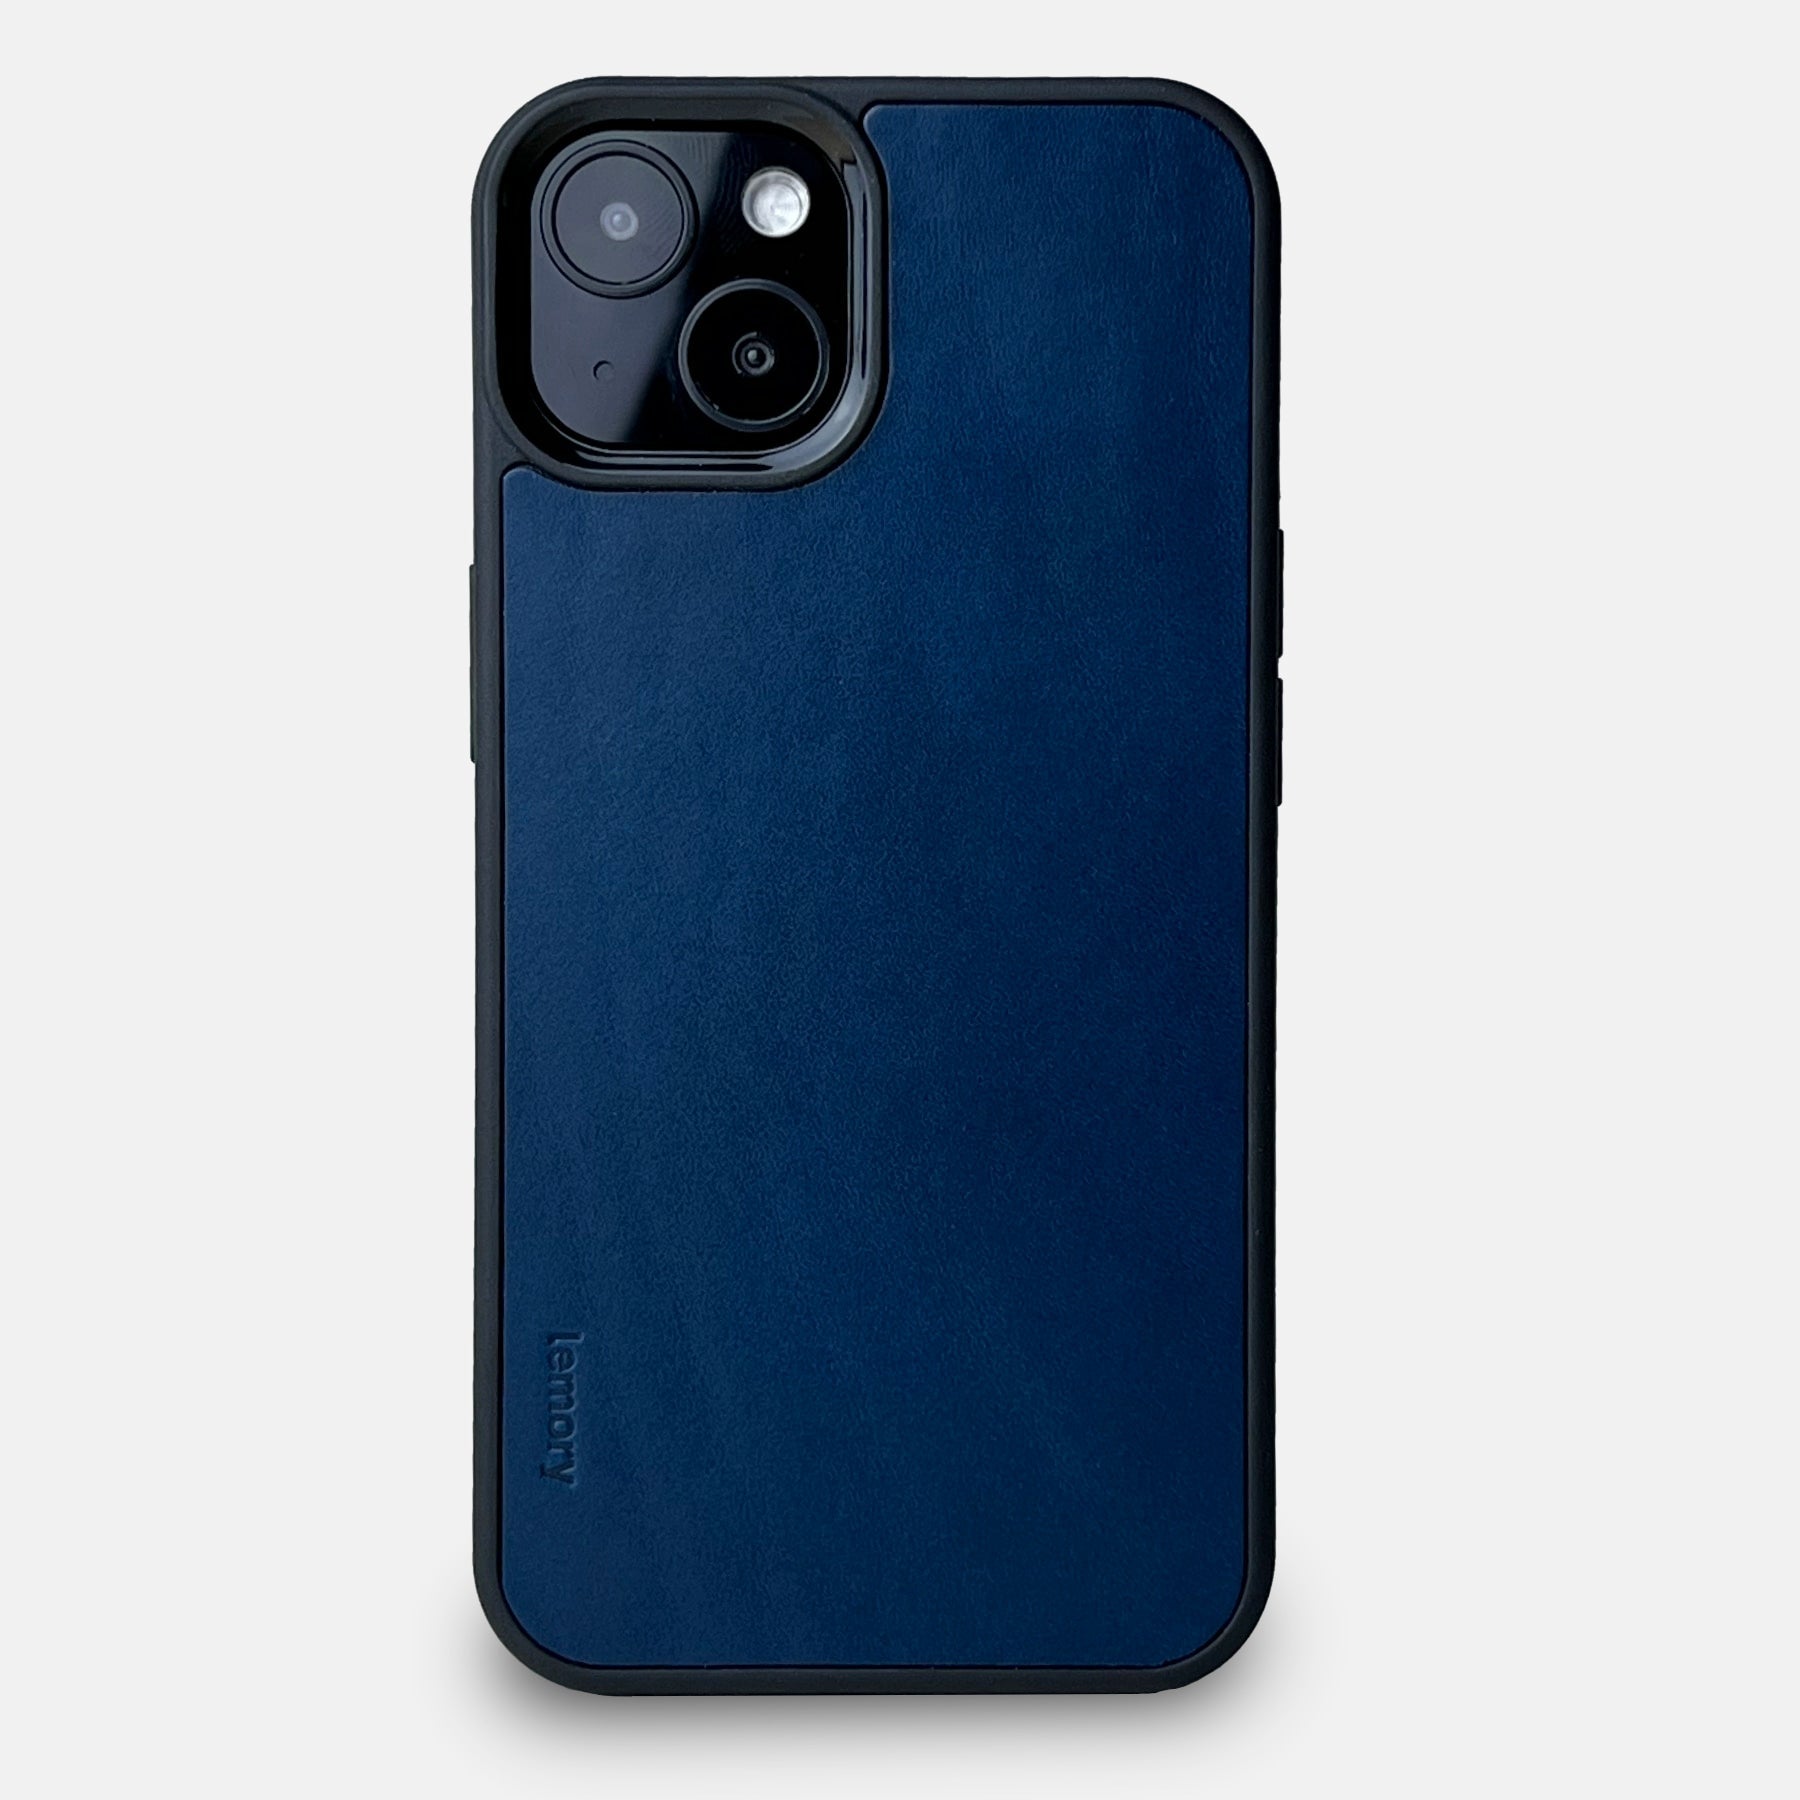 Prémiový kožený kryt Lemory PROTECT na mobil Apple iPhone 14 tmavě modrý (Prémiový kožený kryt, pouzdro, obal Lemory PROTECT na mobilní telefon Apple iPhone 14 tmavě modrý)